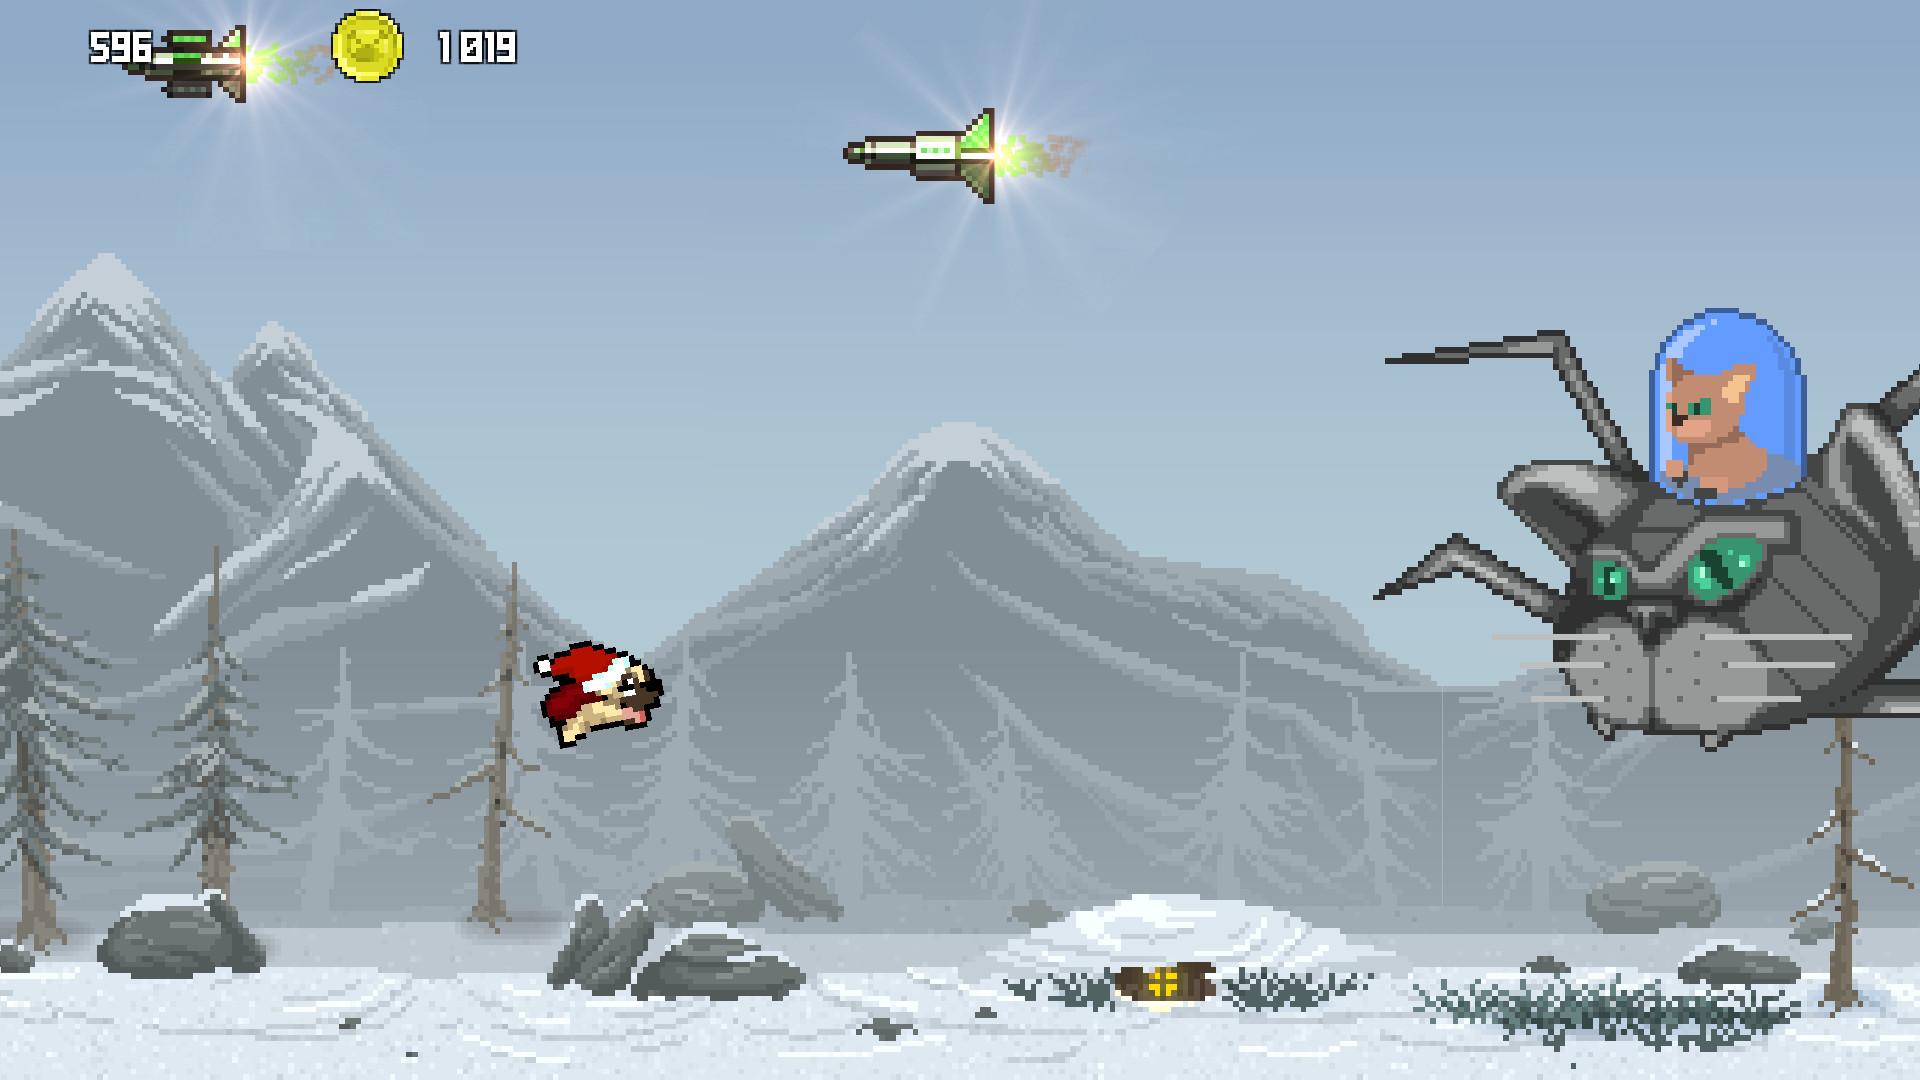 Screenshot №2 from game Super Mega Neo Pug